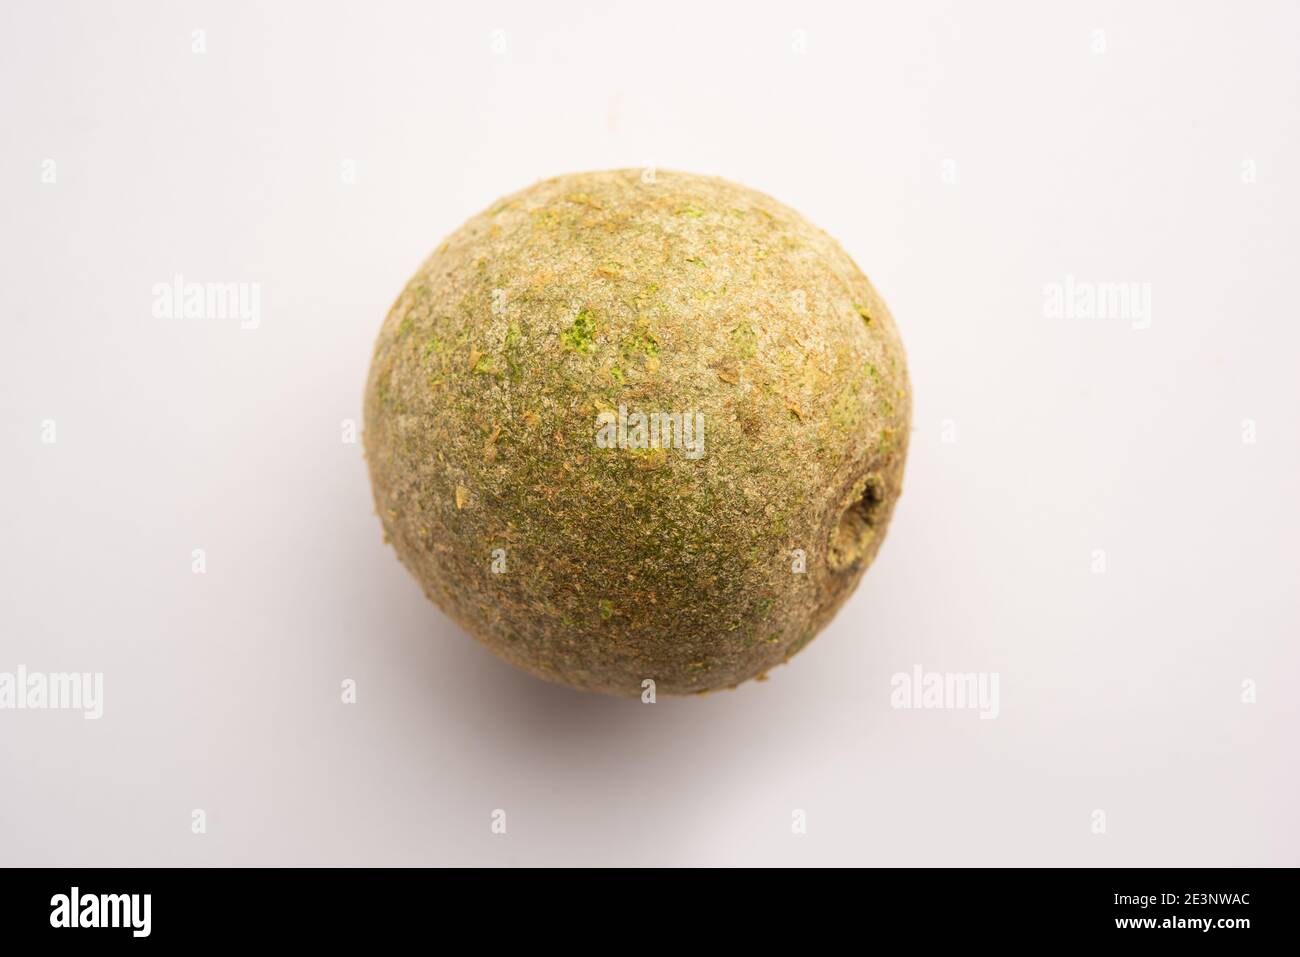 Wood apple or Kavath fruit, isolated over white background Stock Photo